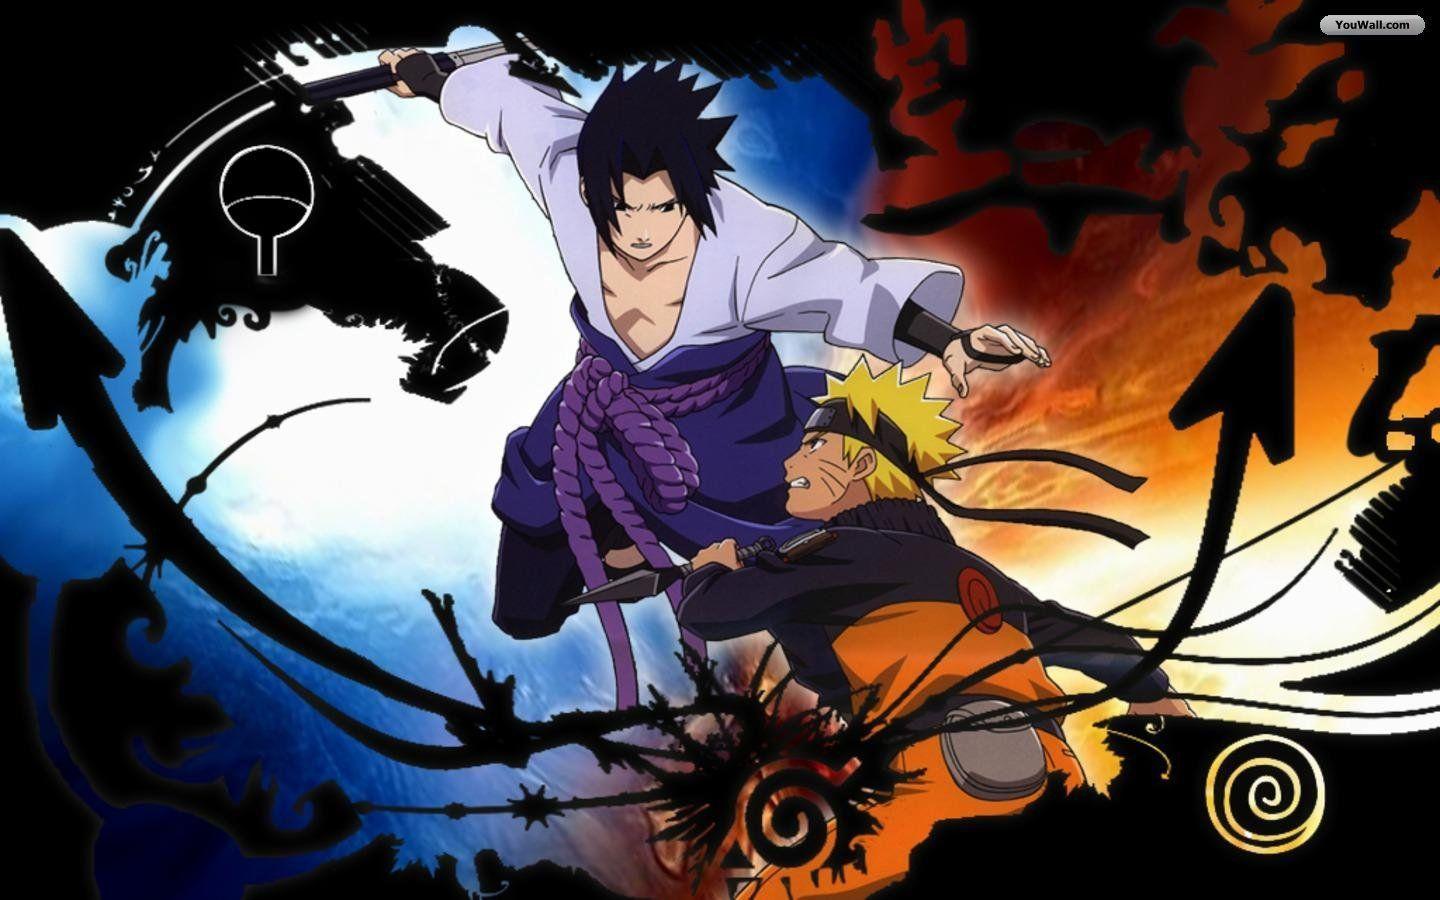 Naruto vs Sasuke Wallpaper Free Naruto vs Sasuke Background